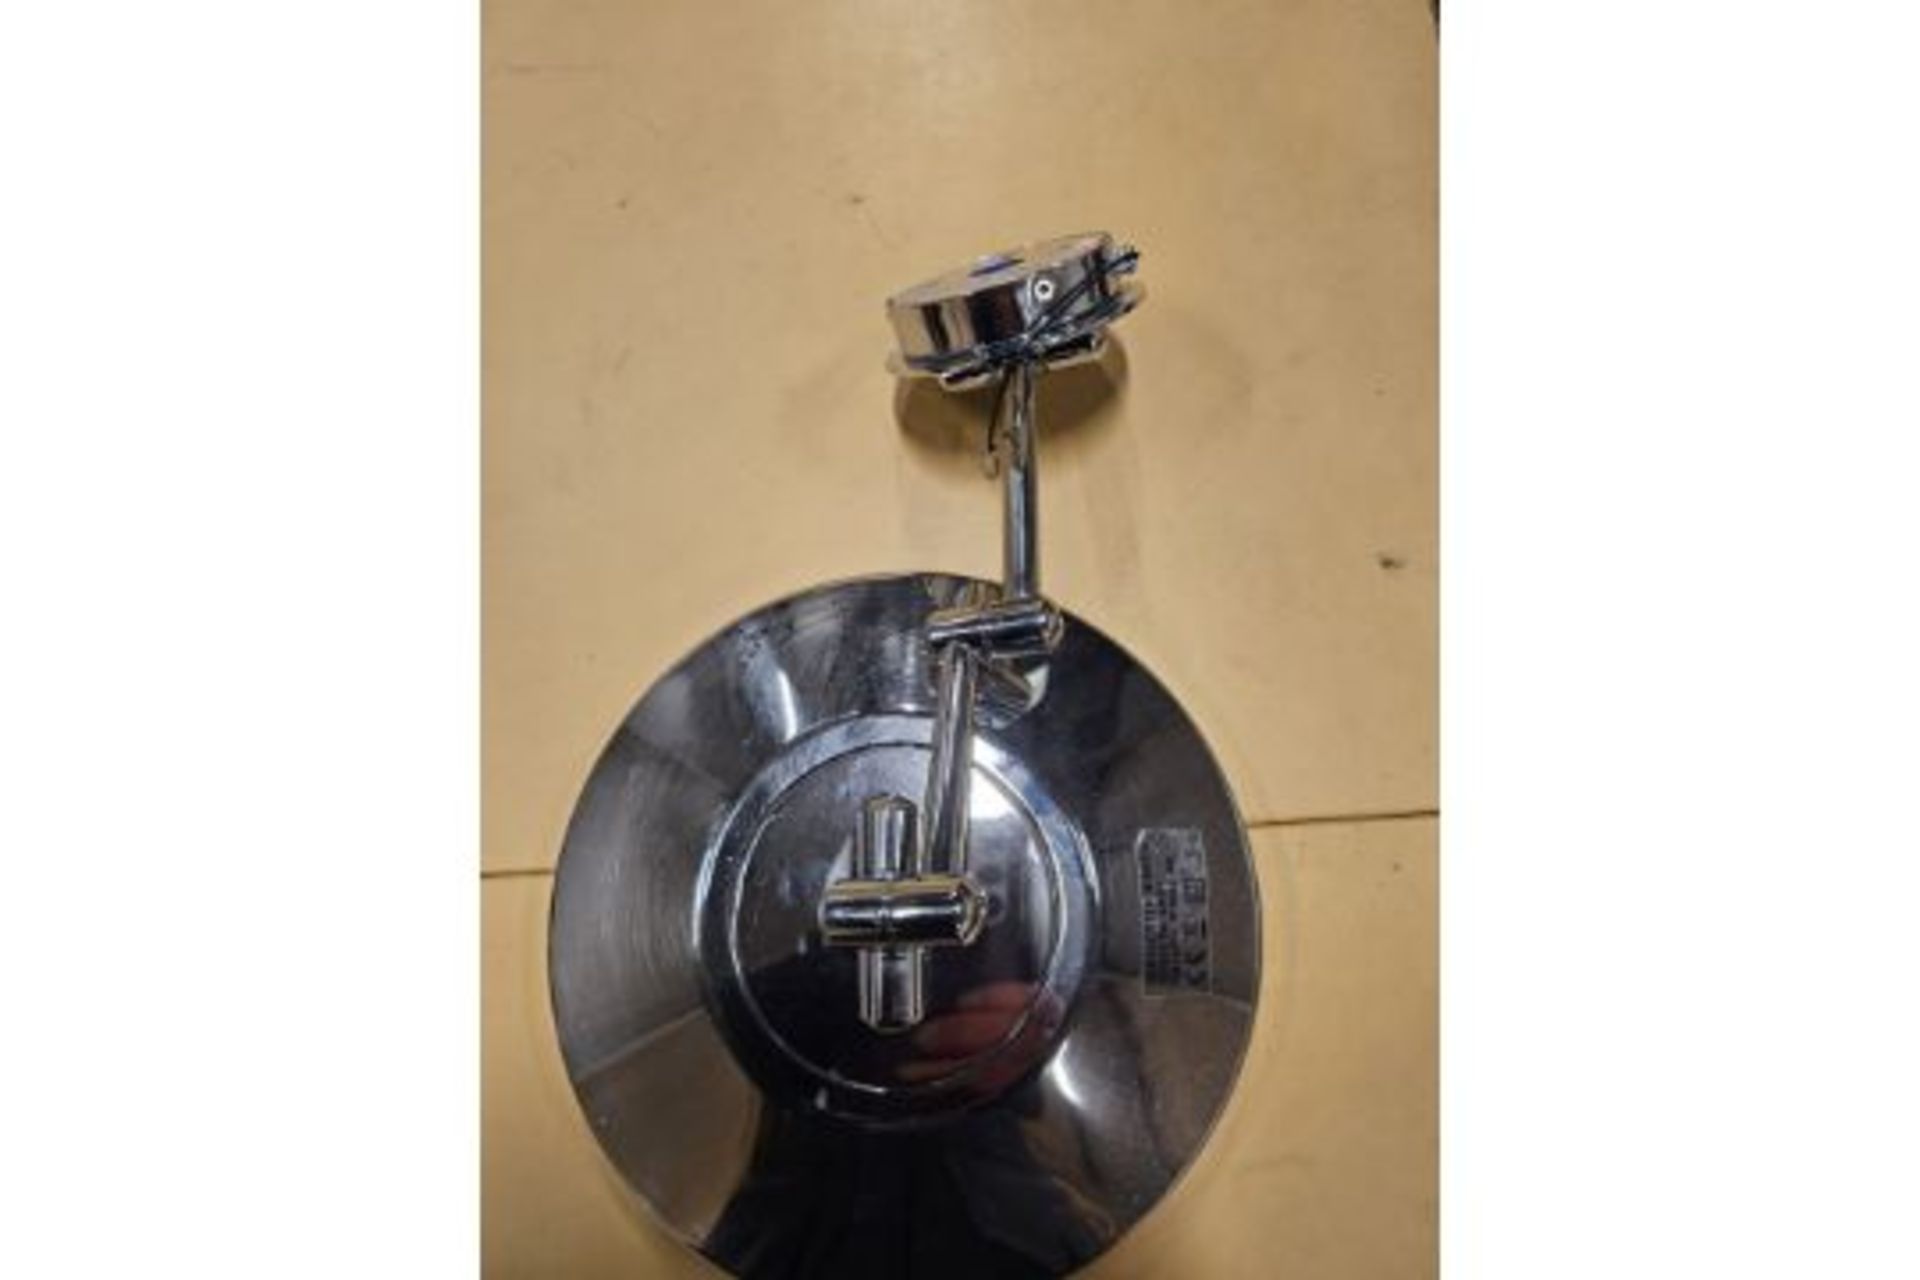 Led Illuminated Magnifying Vanity Mirror For Bathroom Round Ingress Protection Rating Ip44 - Image 2 of 3